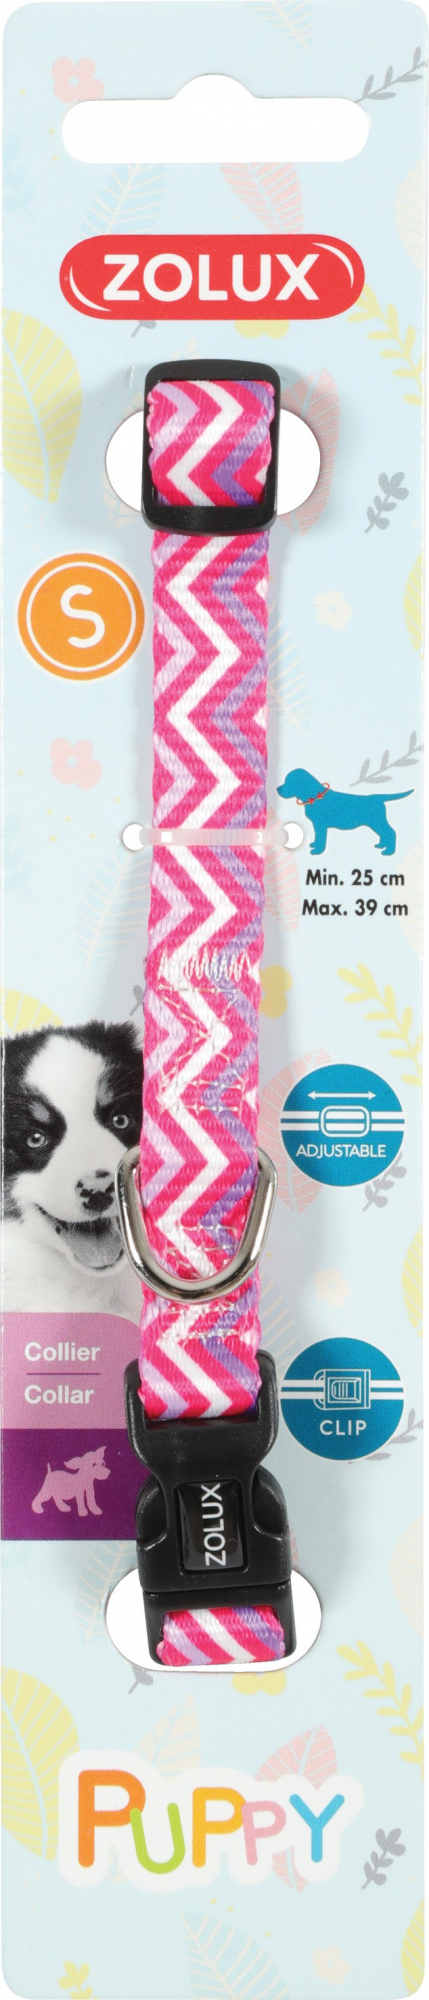 Collar de nylon ajustable para cachorros Puppy Pixie - rosa